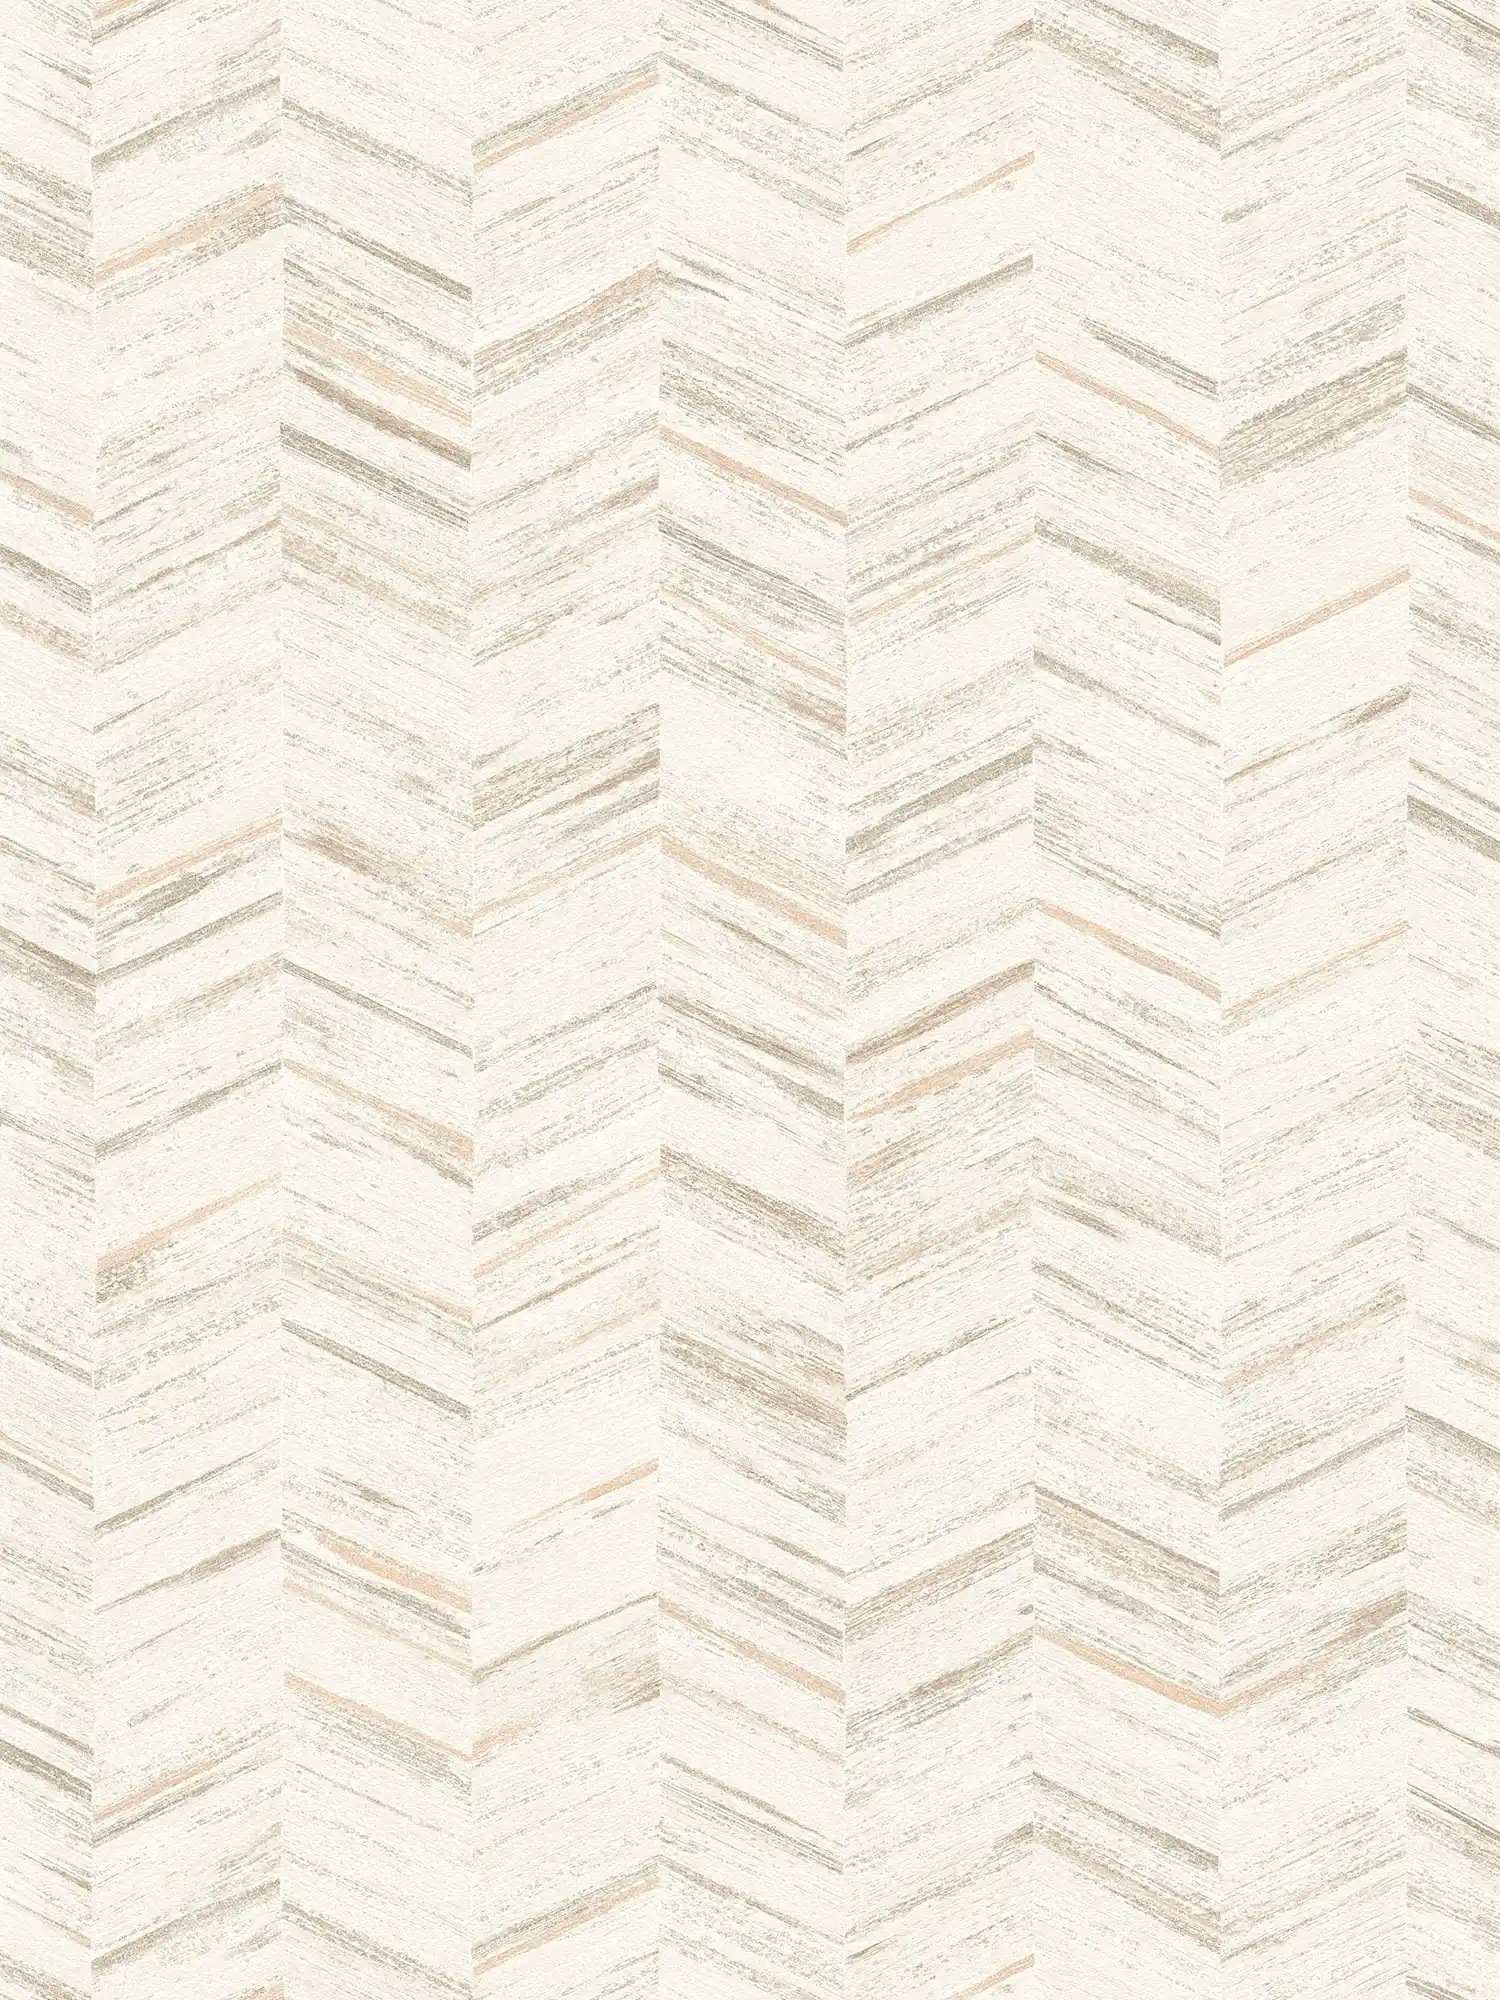 wallpaper wood look stripes with herringbone effect - white, cream
